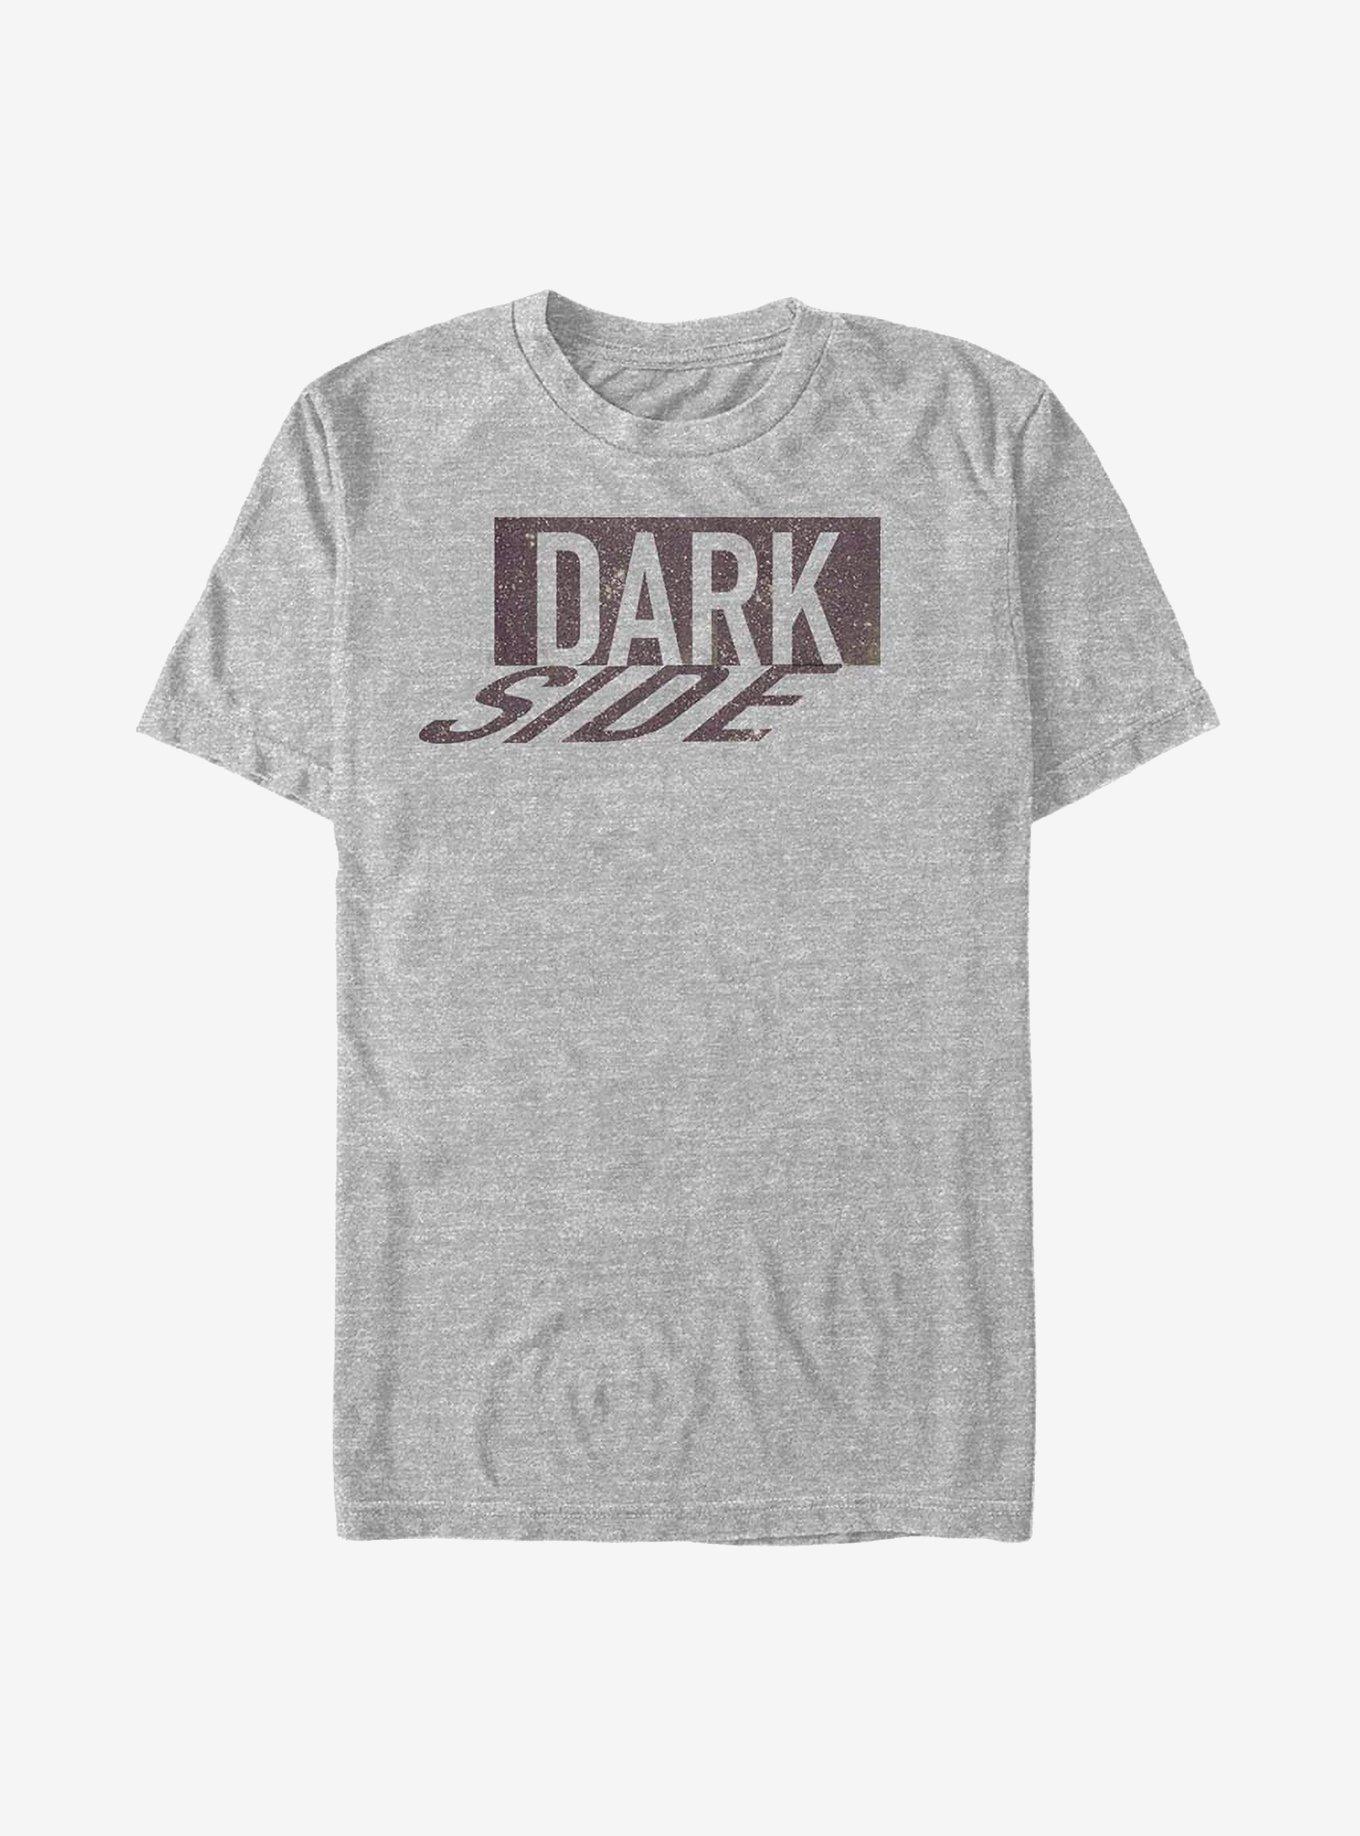 Star Wars Dark Shadow T-Shirt, ATH HTR, hi-res